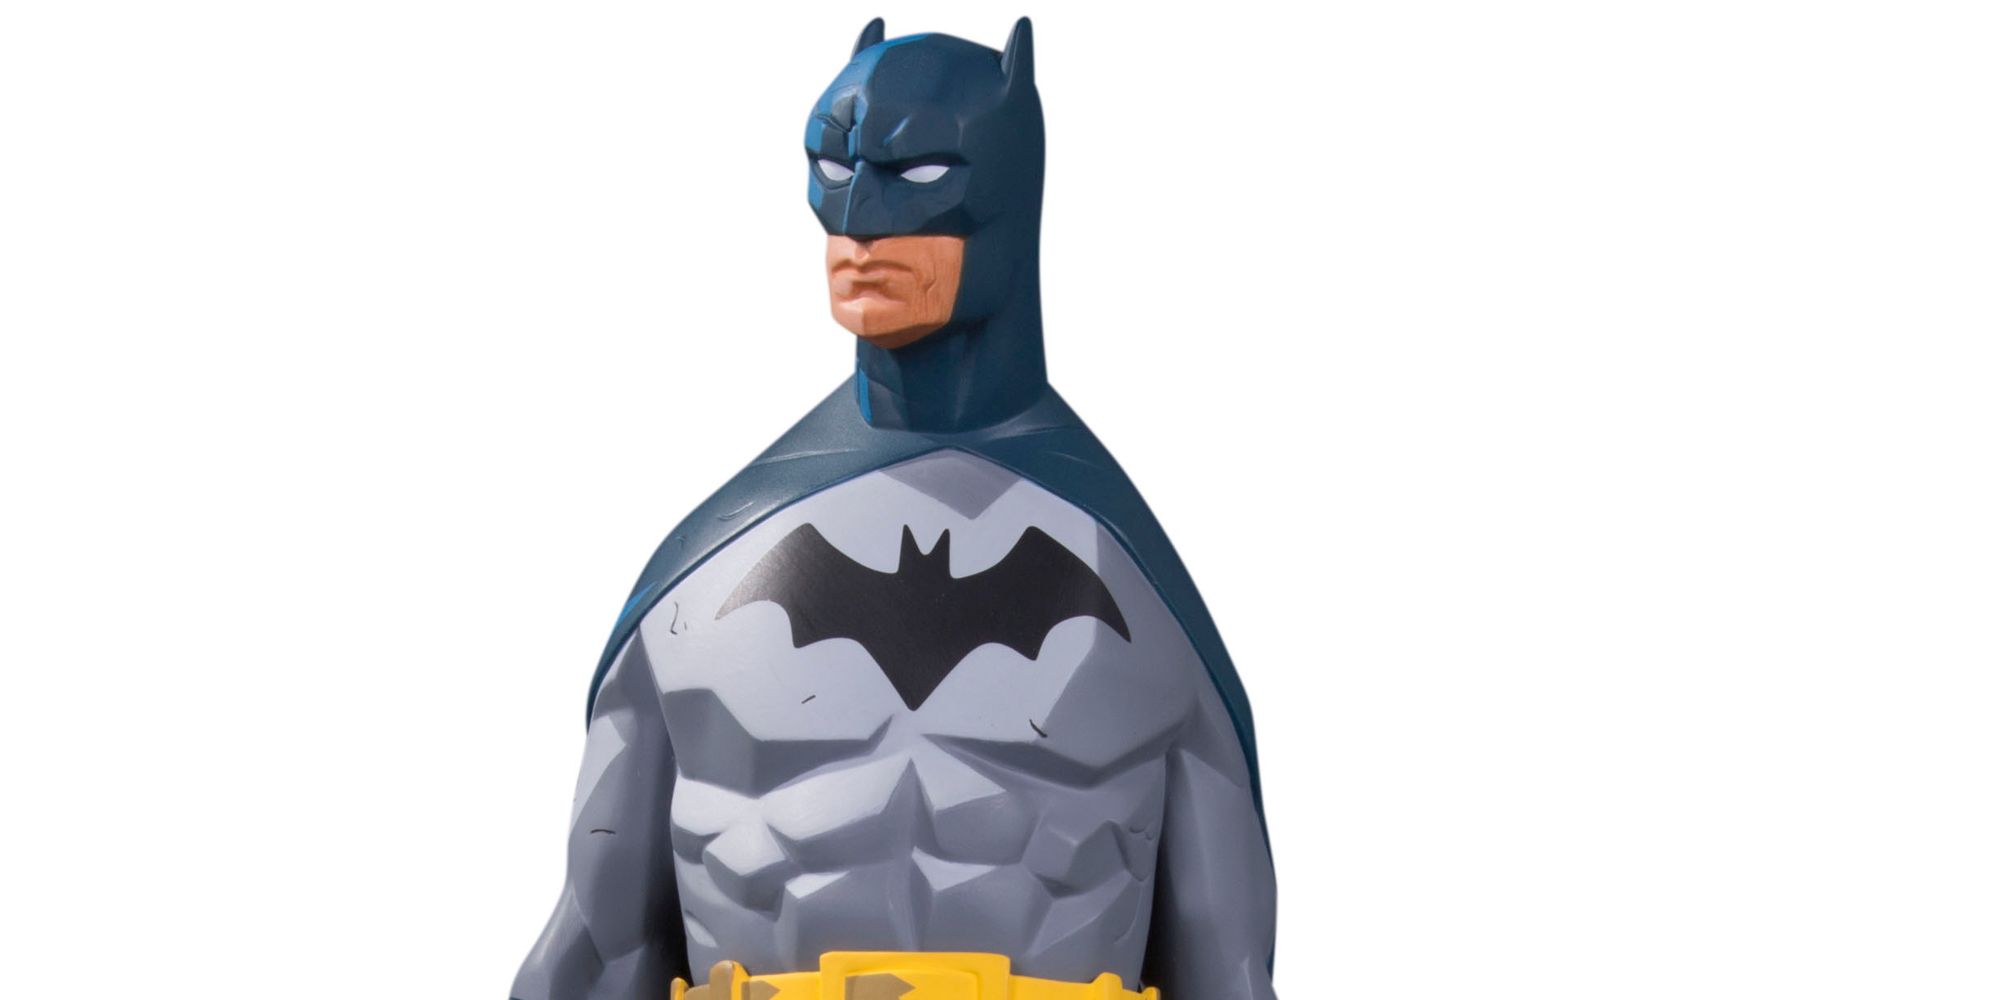 DC Designer Series Batman by Mike Mignola Statue Featured